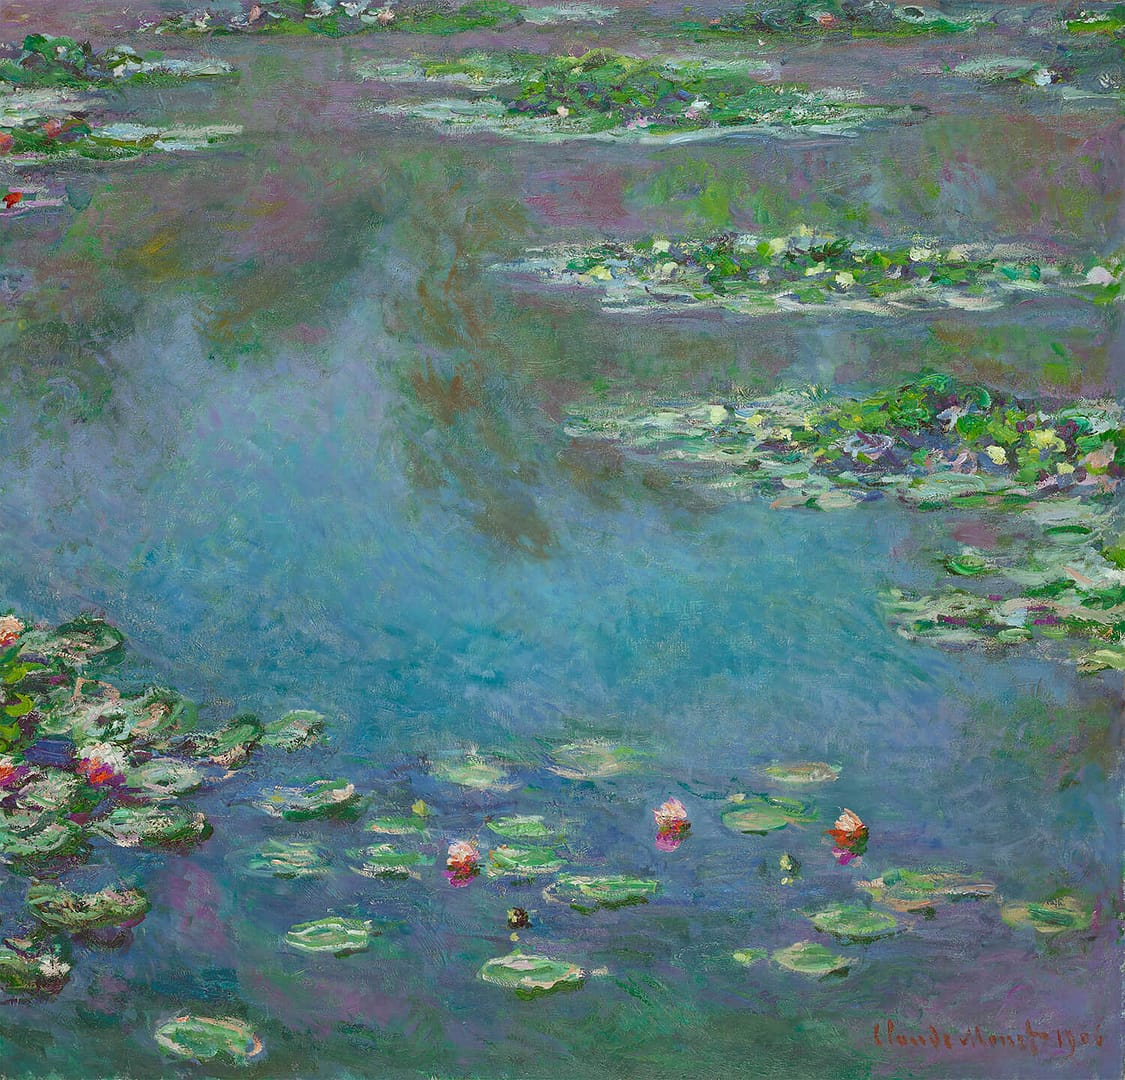 Water Lilies (1906) | Claude Monet | FREE DIGITAL DOWNLOAD